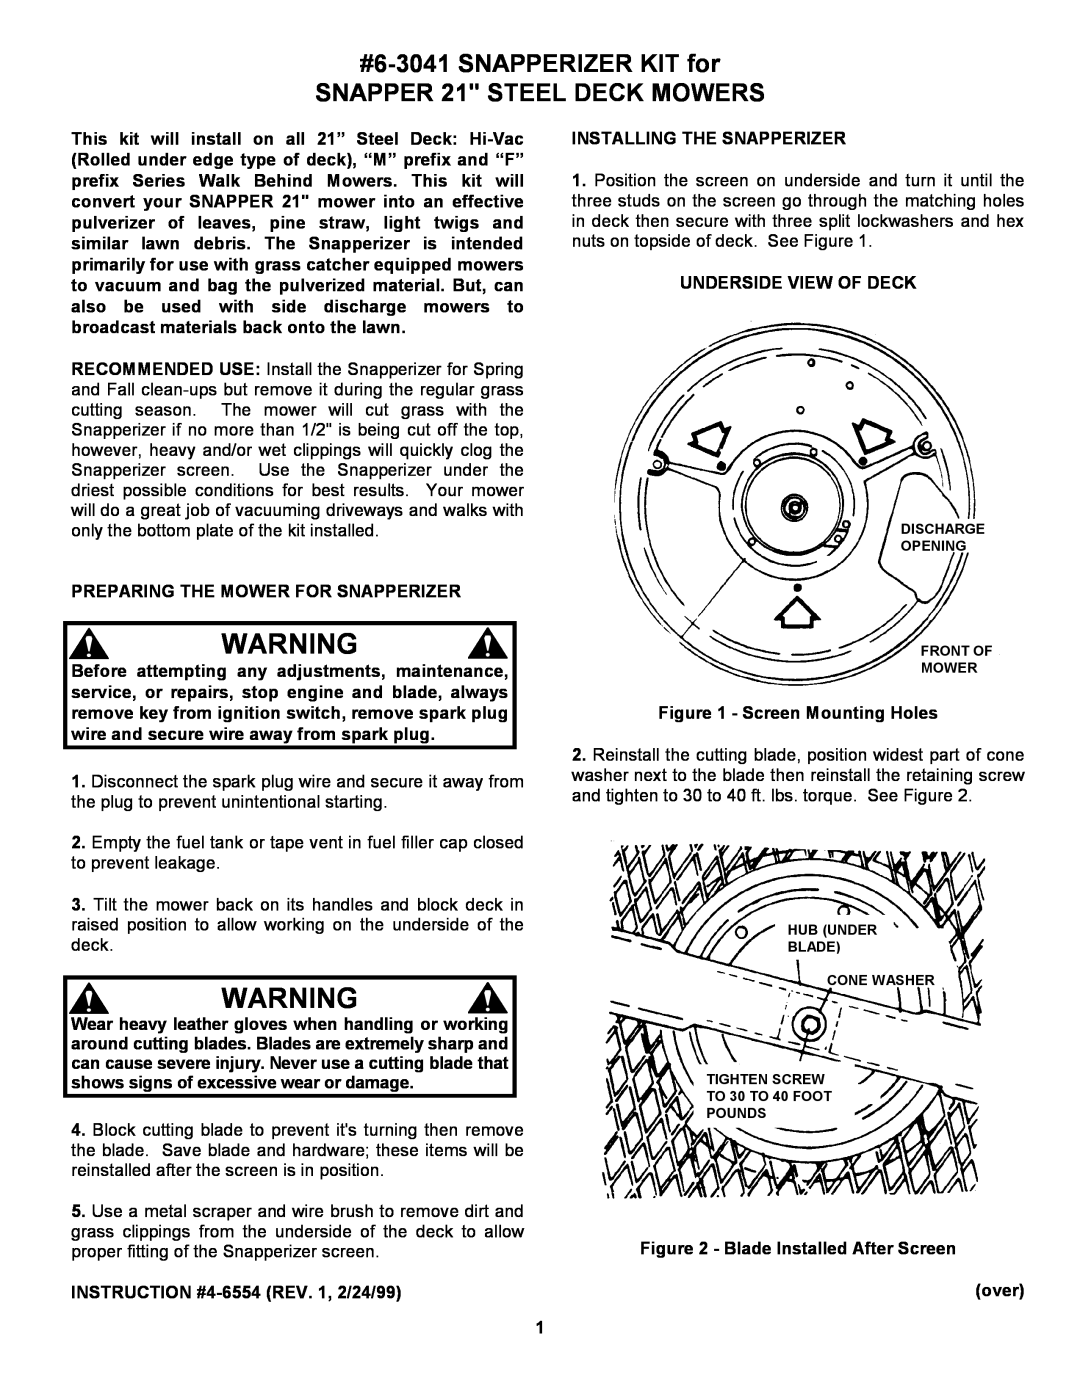 Snapper manual #6-3041SNAPPERIZER KIT for, SNAPPER 21 STEEL DECK MOWERS 